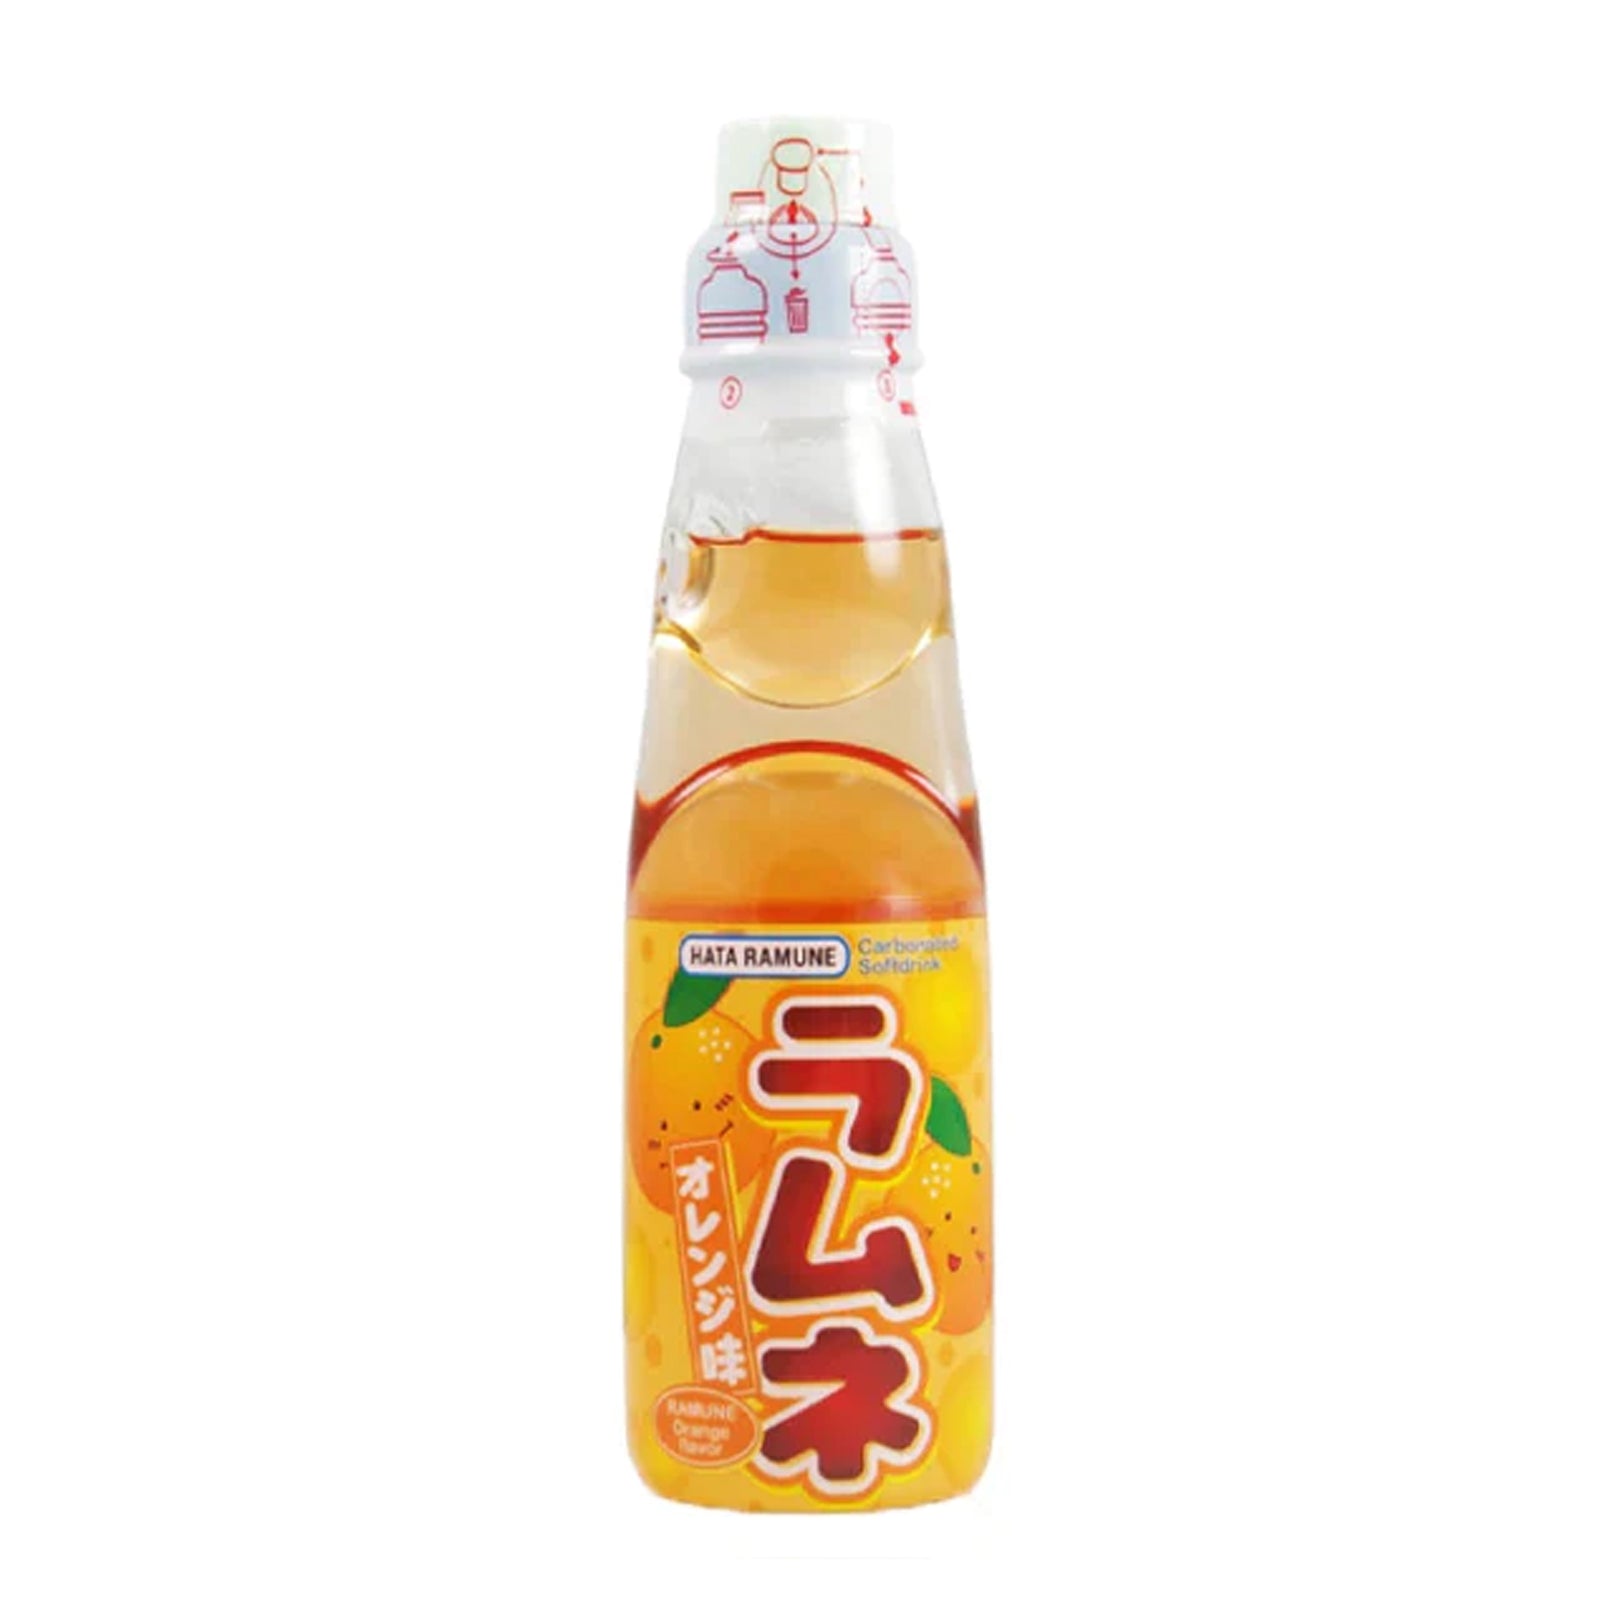 Hata Ramune Orange משקה תוסס יפני בטעם תפוז